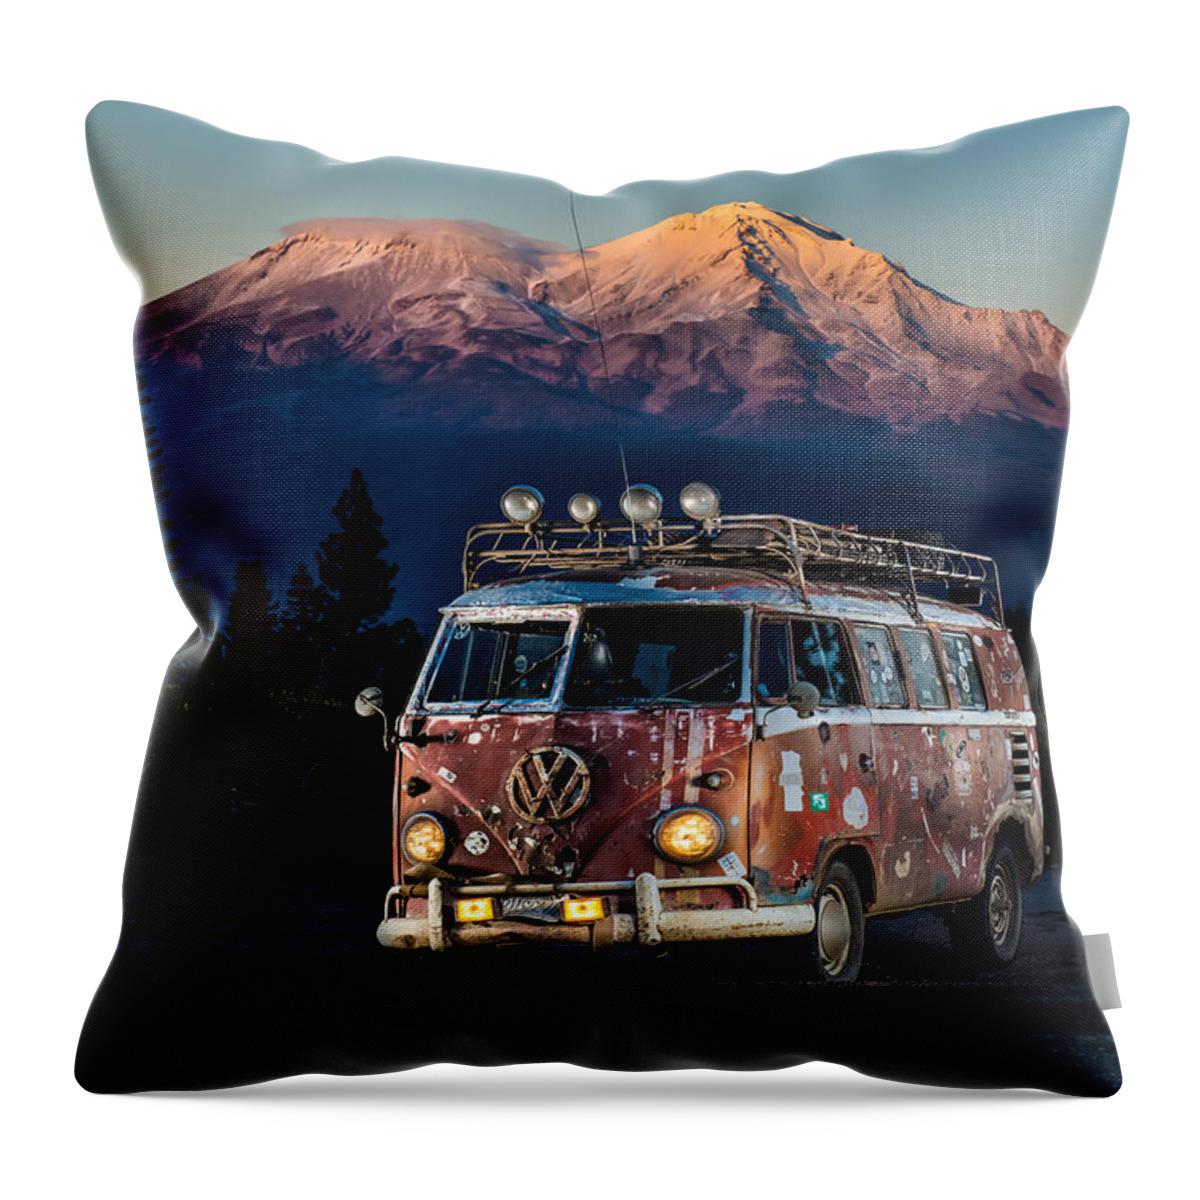 Richard Kimbrough Throw Pillow featuring the photograph Rustybus and Mount Shasta at Dusk by Richard Kimbrough